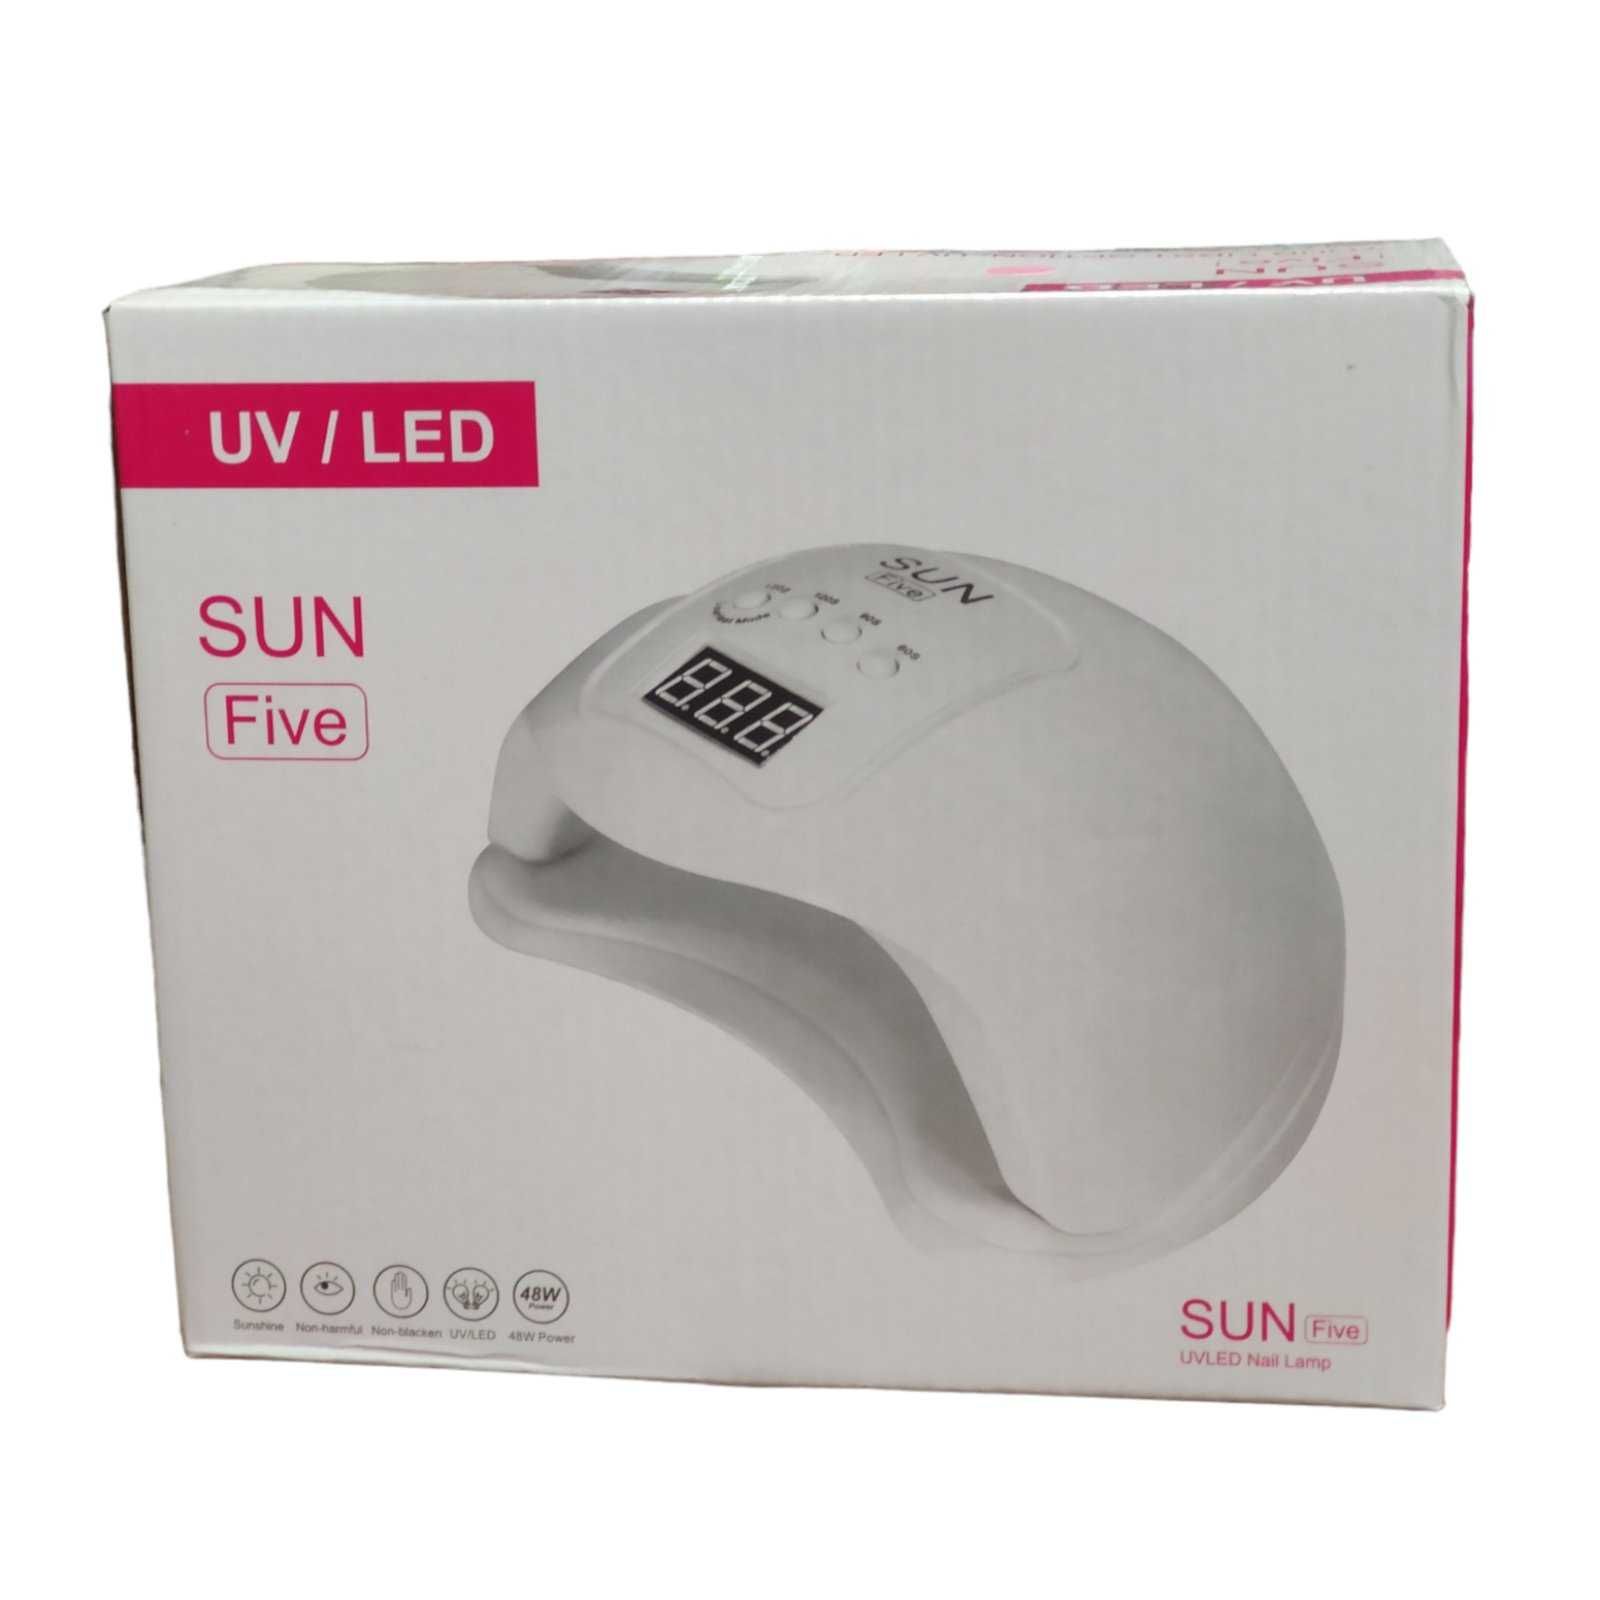 LED UV лед уф лампа Sun5 48вт для наращивания ногтей Питание USB